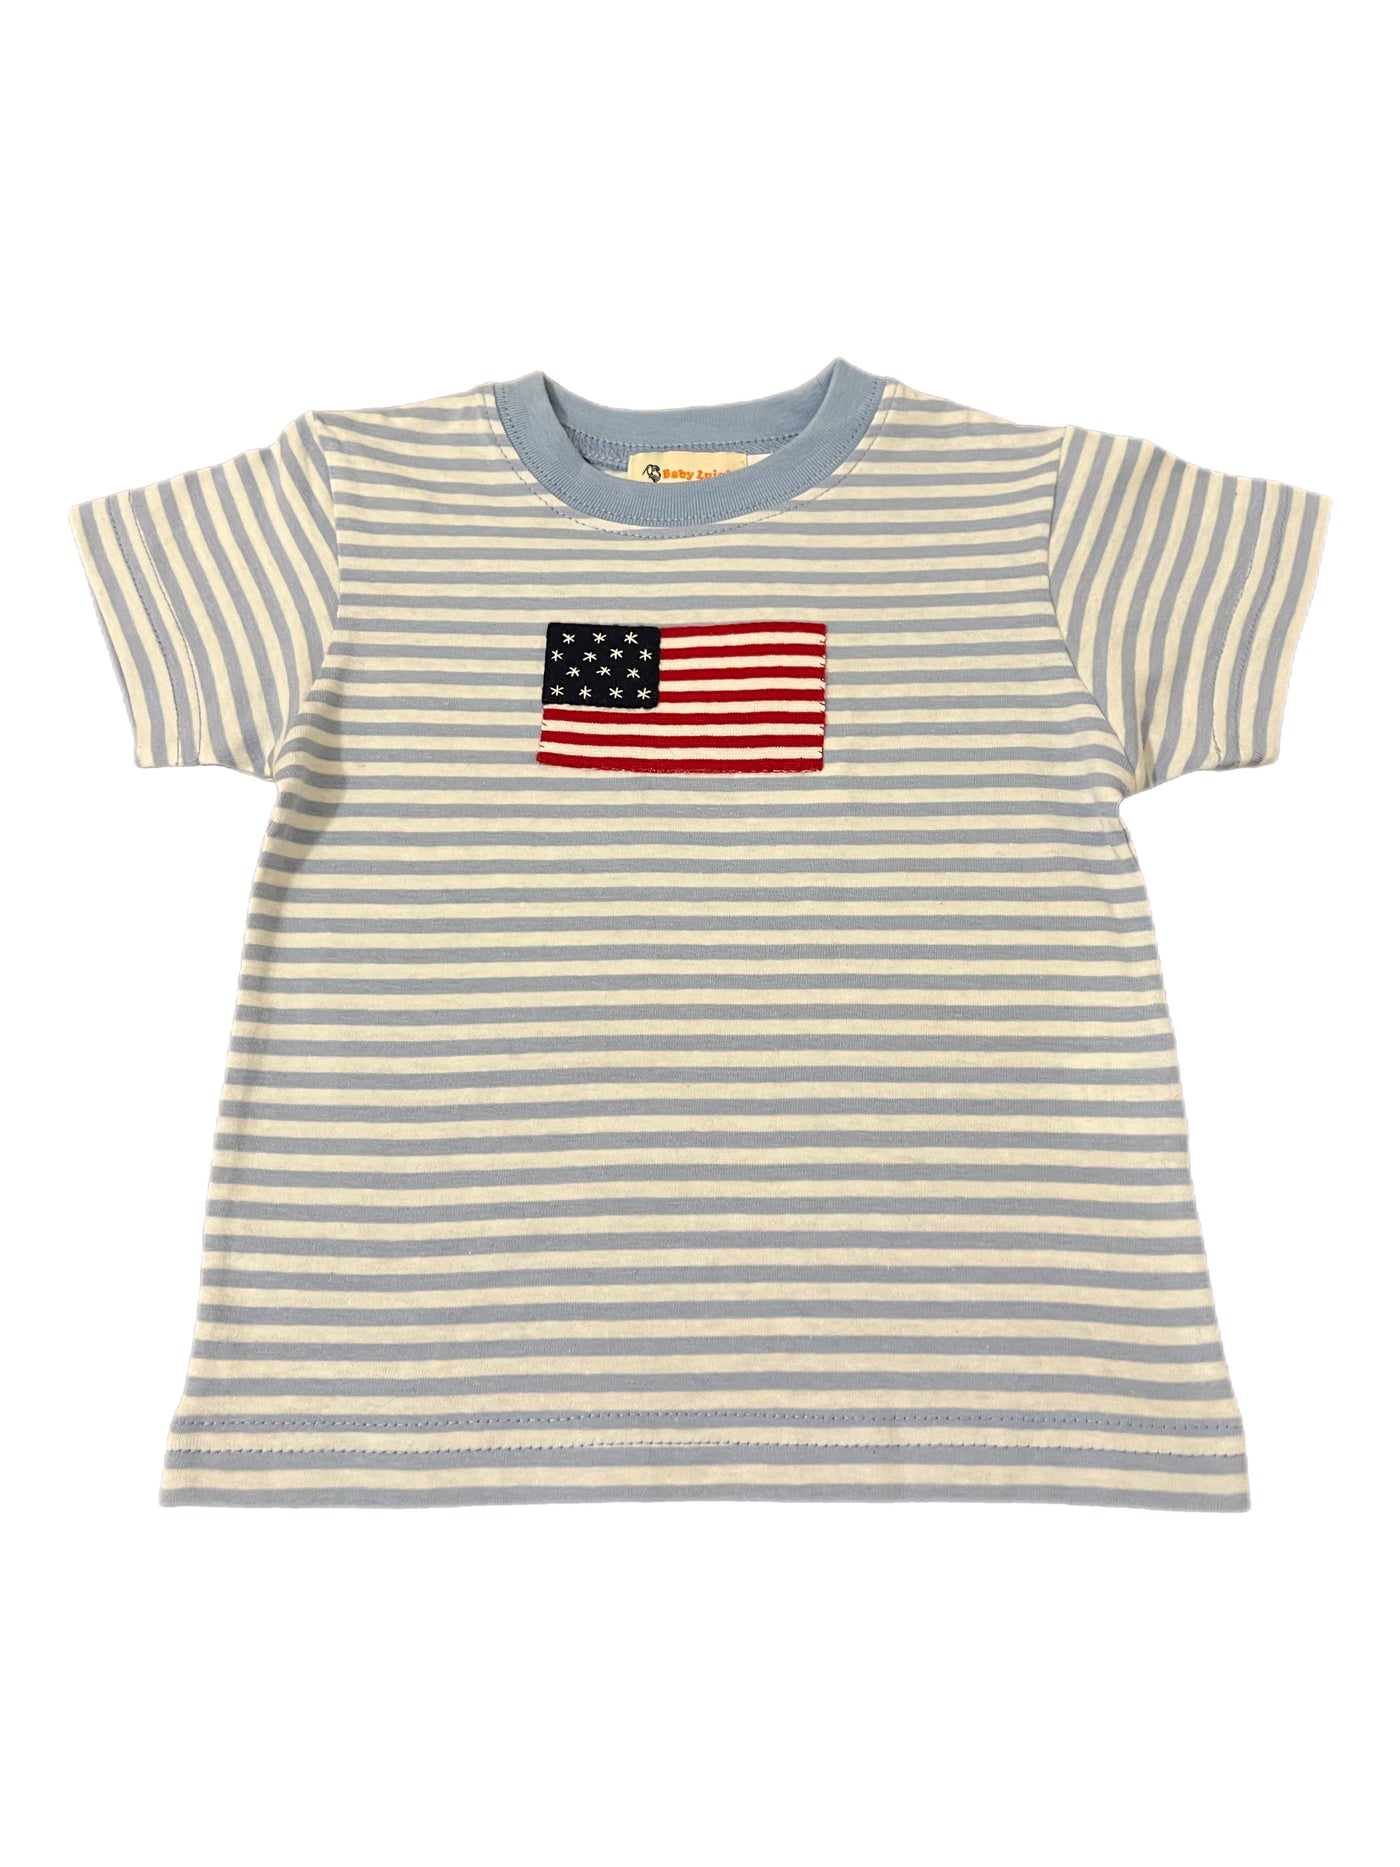 S/S Blue Stripe Flag T-Shirt